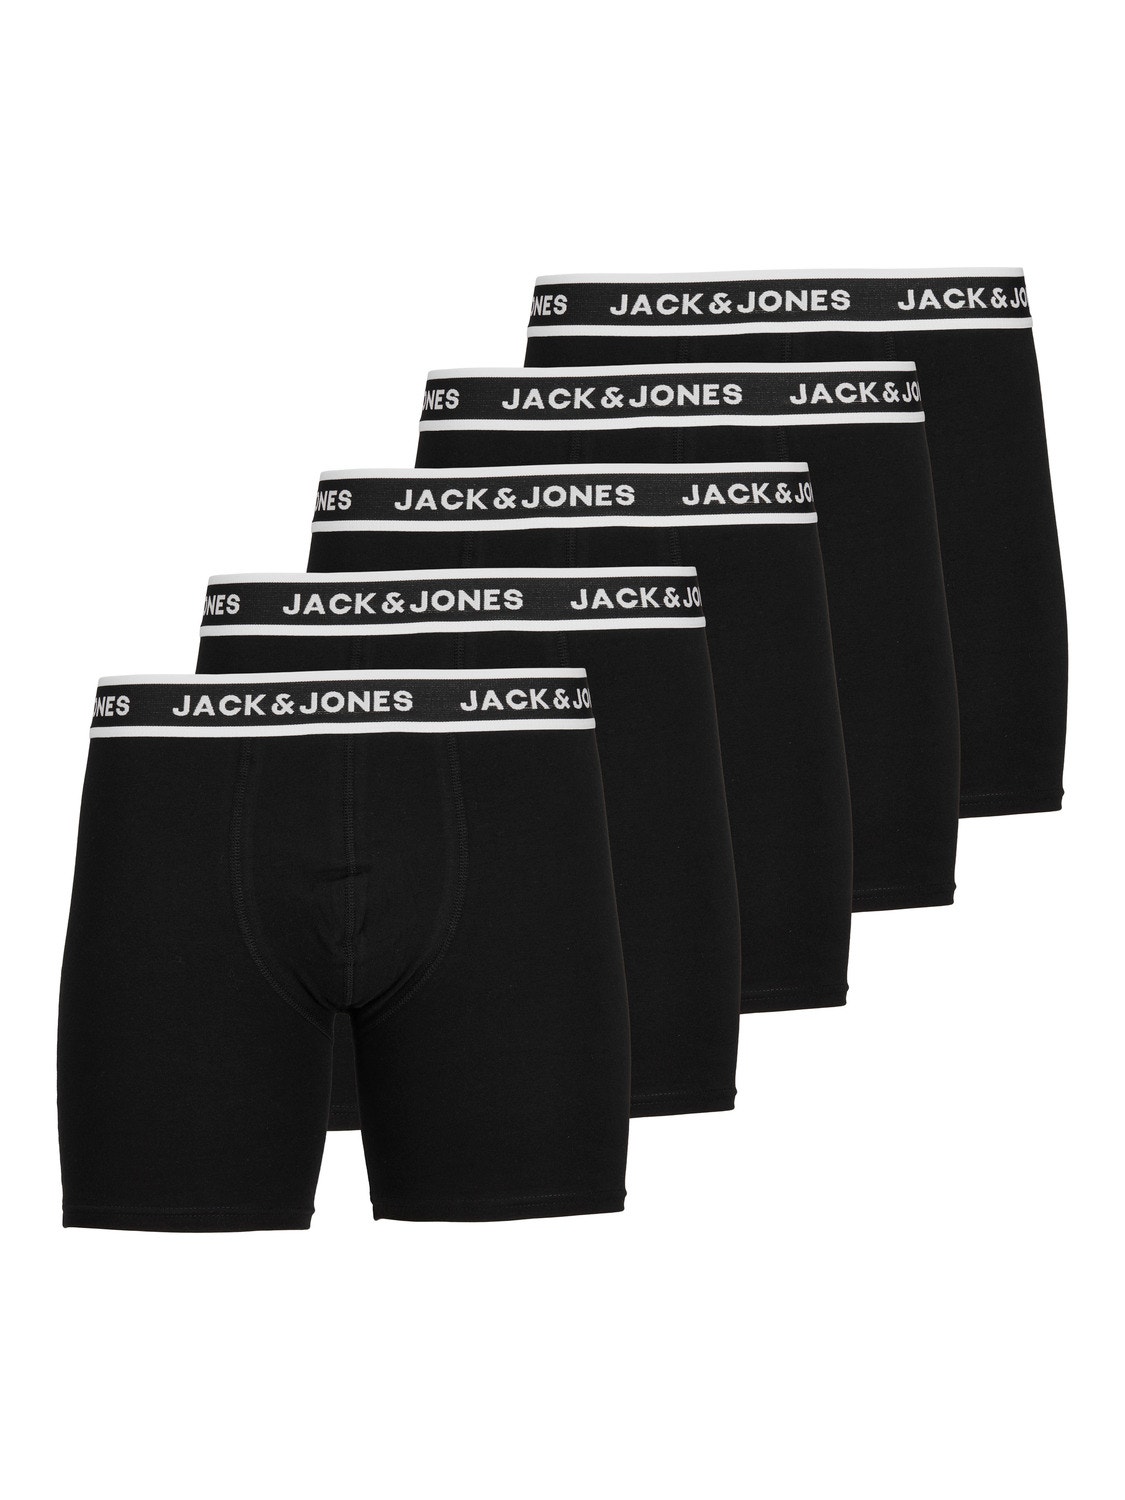 Jack & Jones®  5-PACK COLORFUL BOXERS